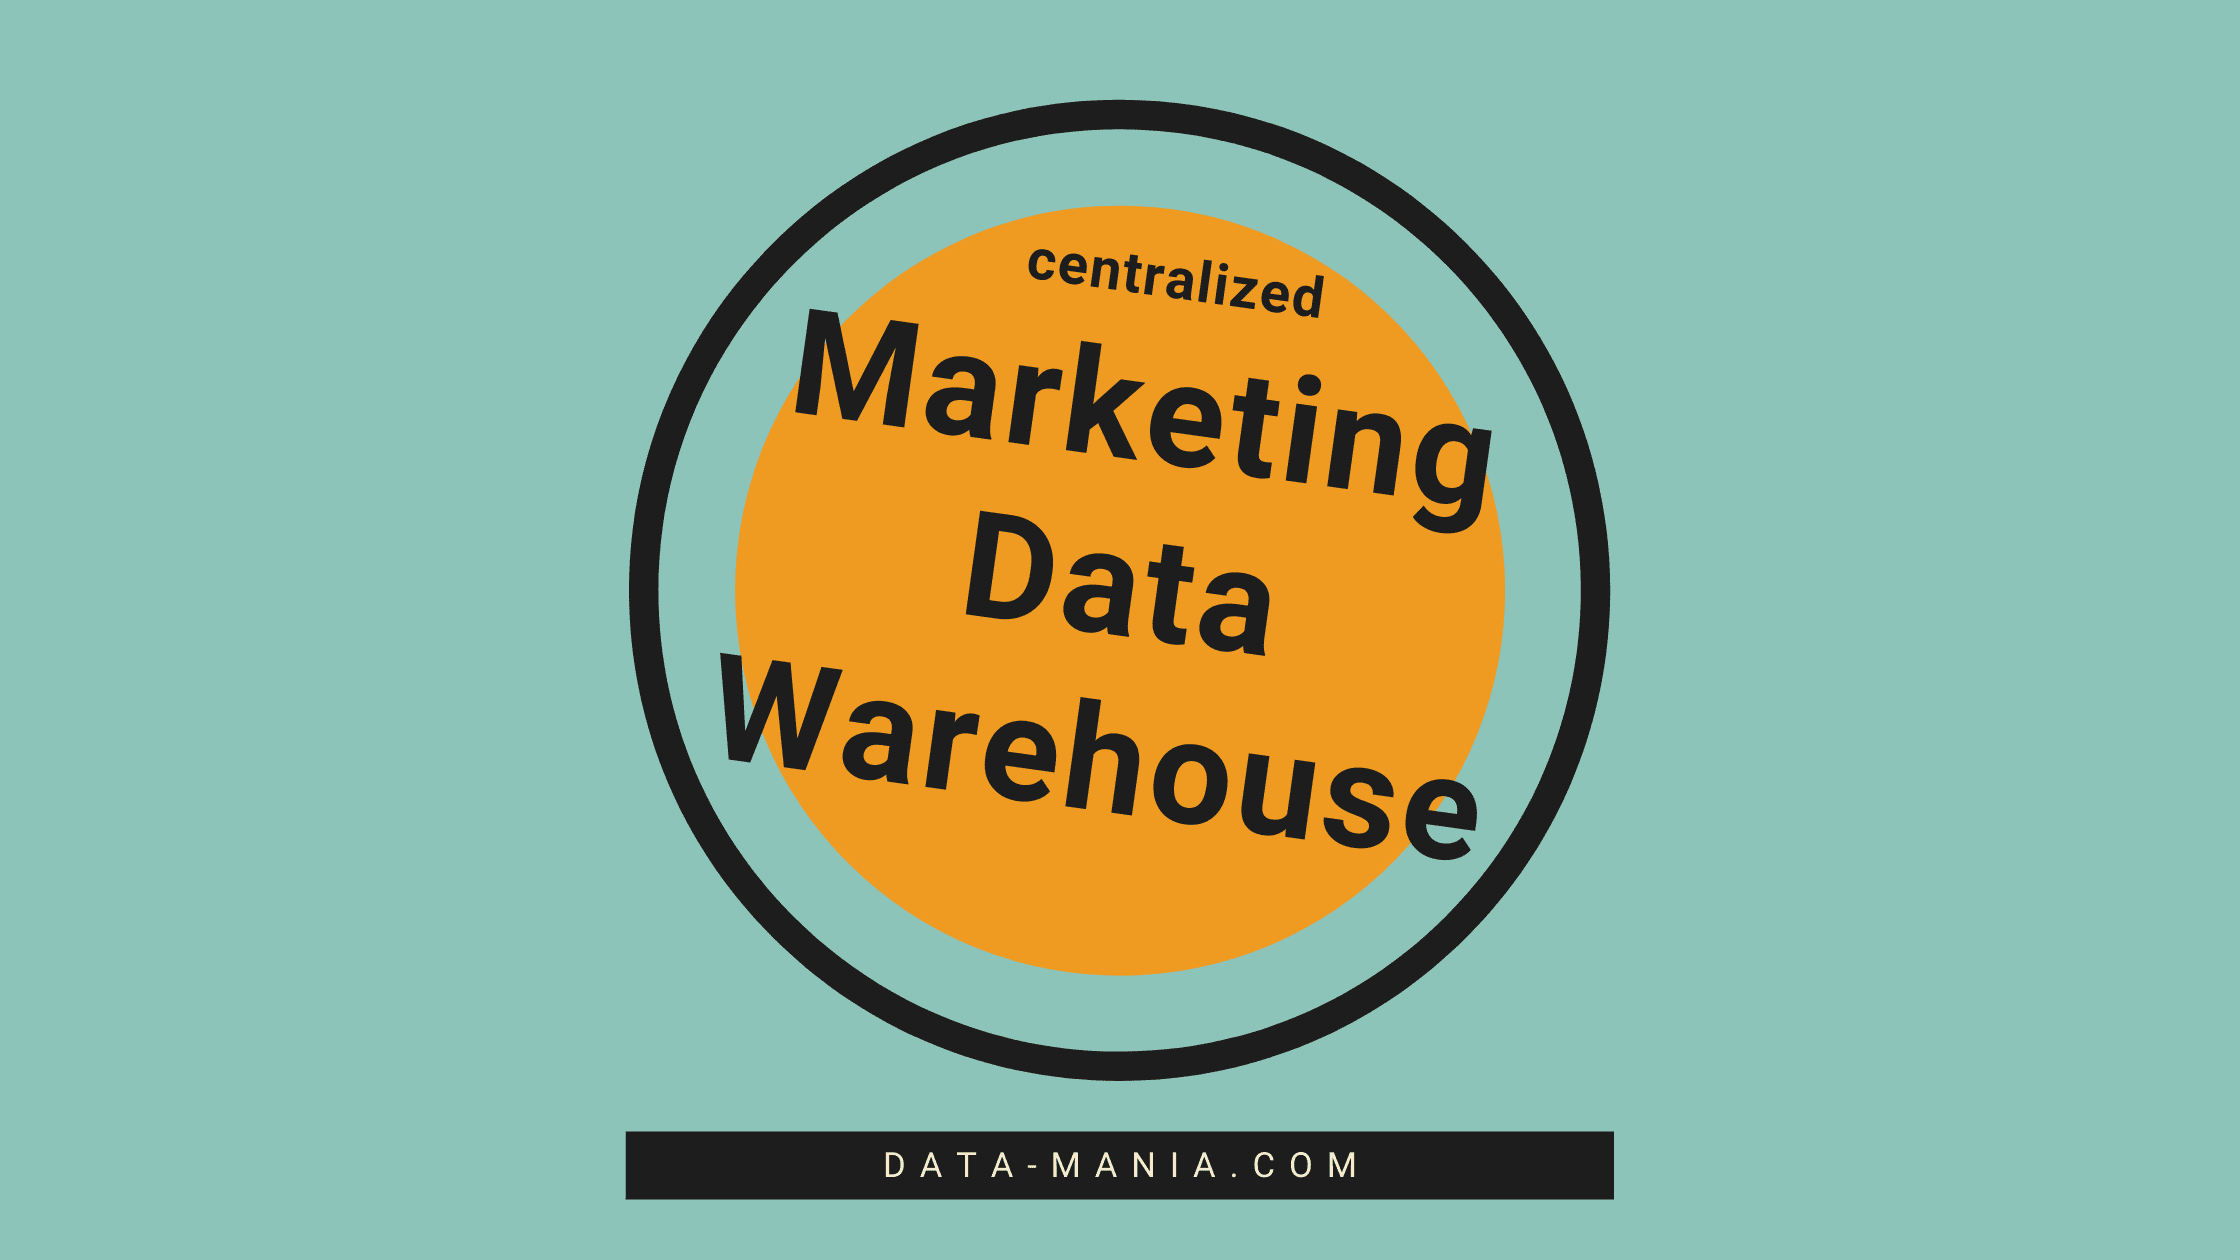 Centralized Marketing Data Warehouse